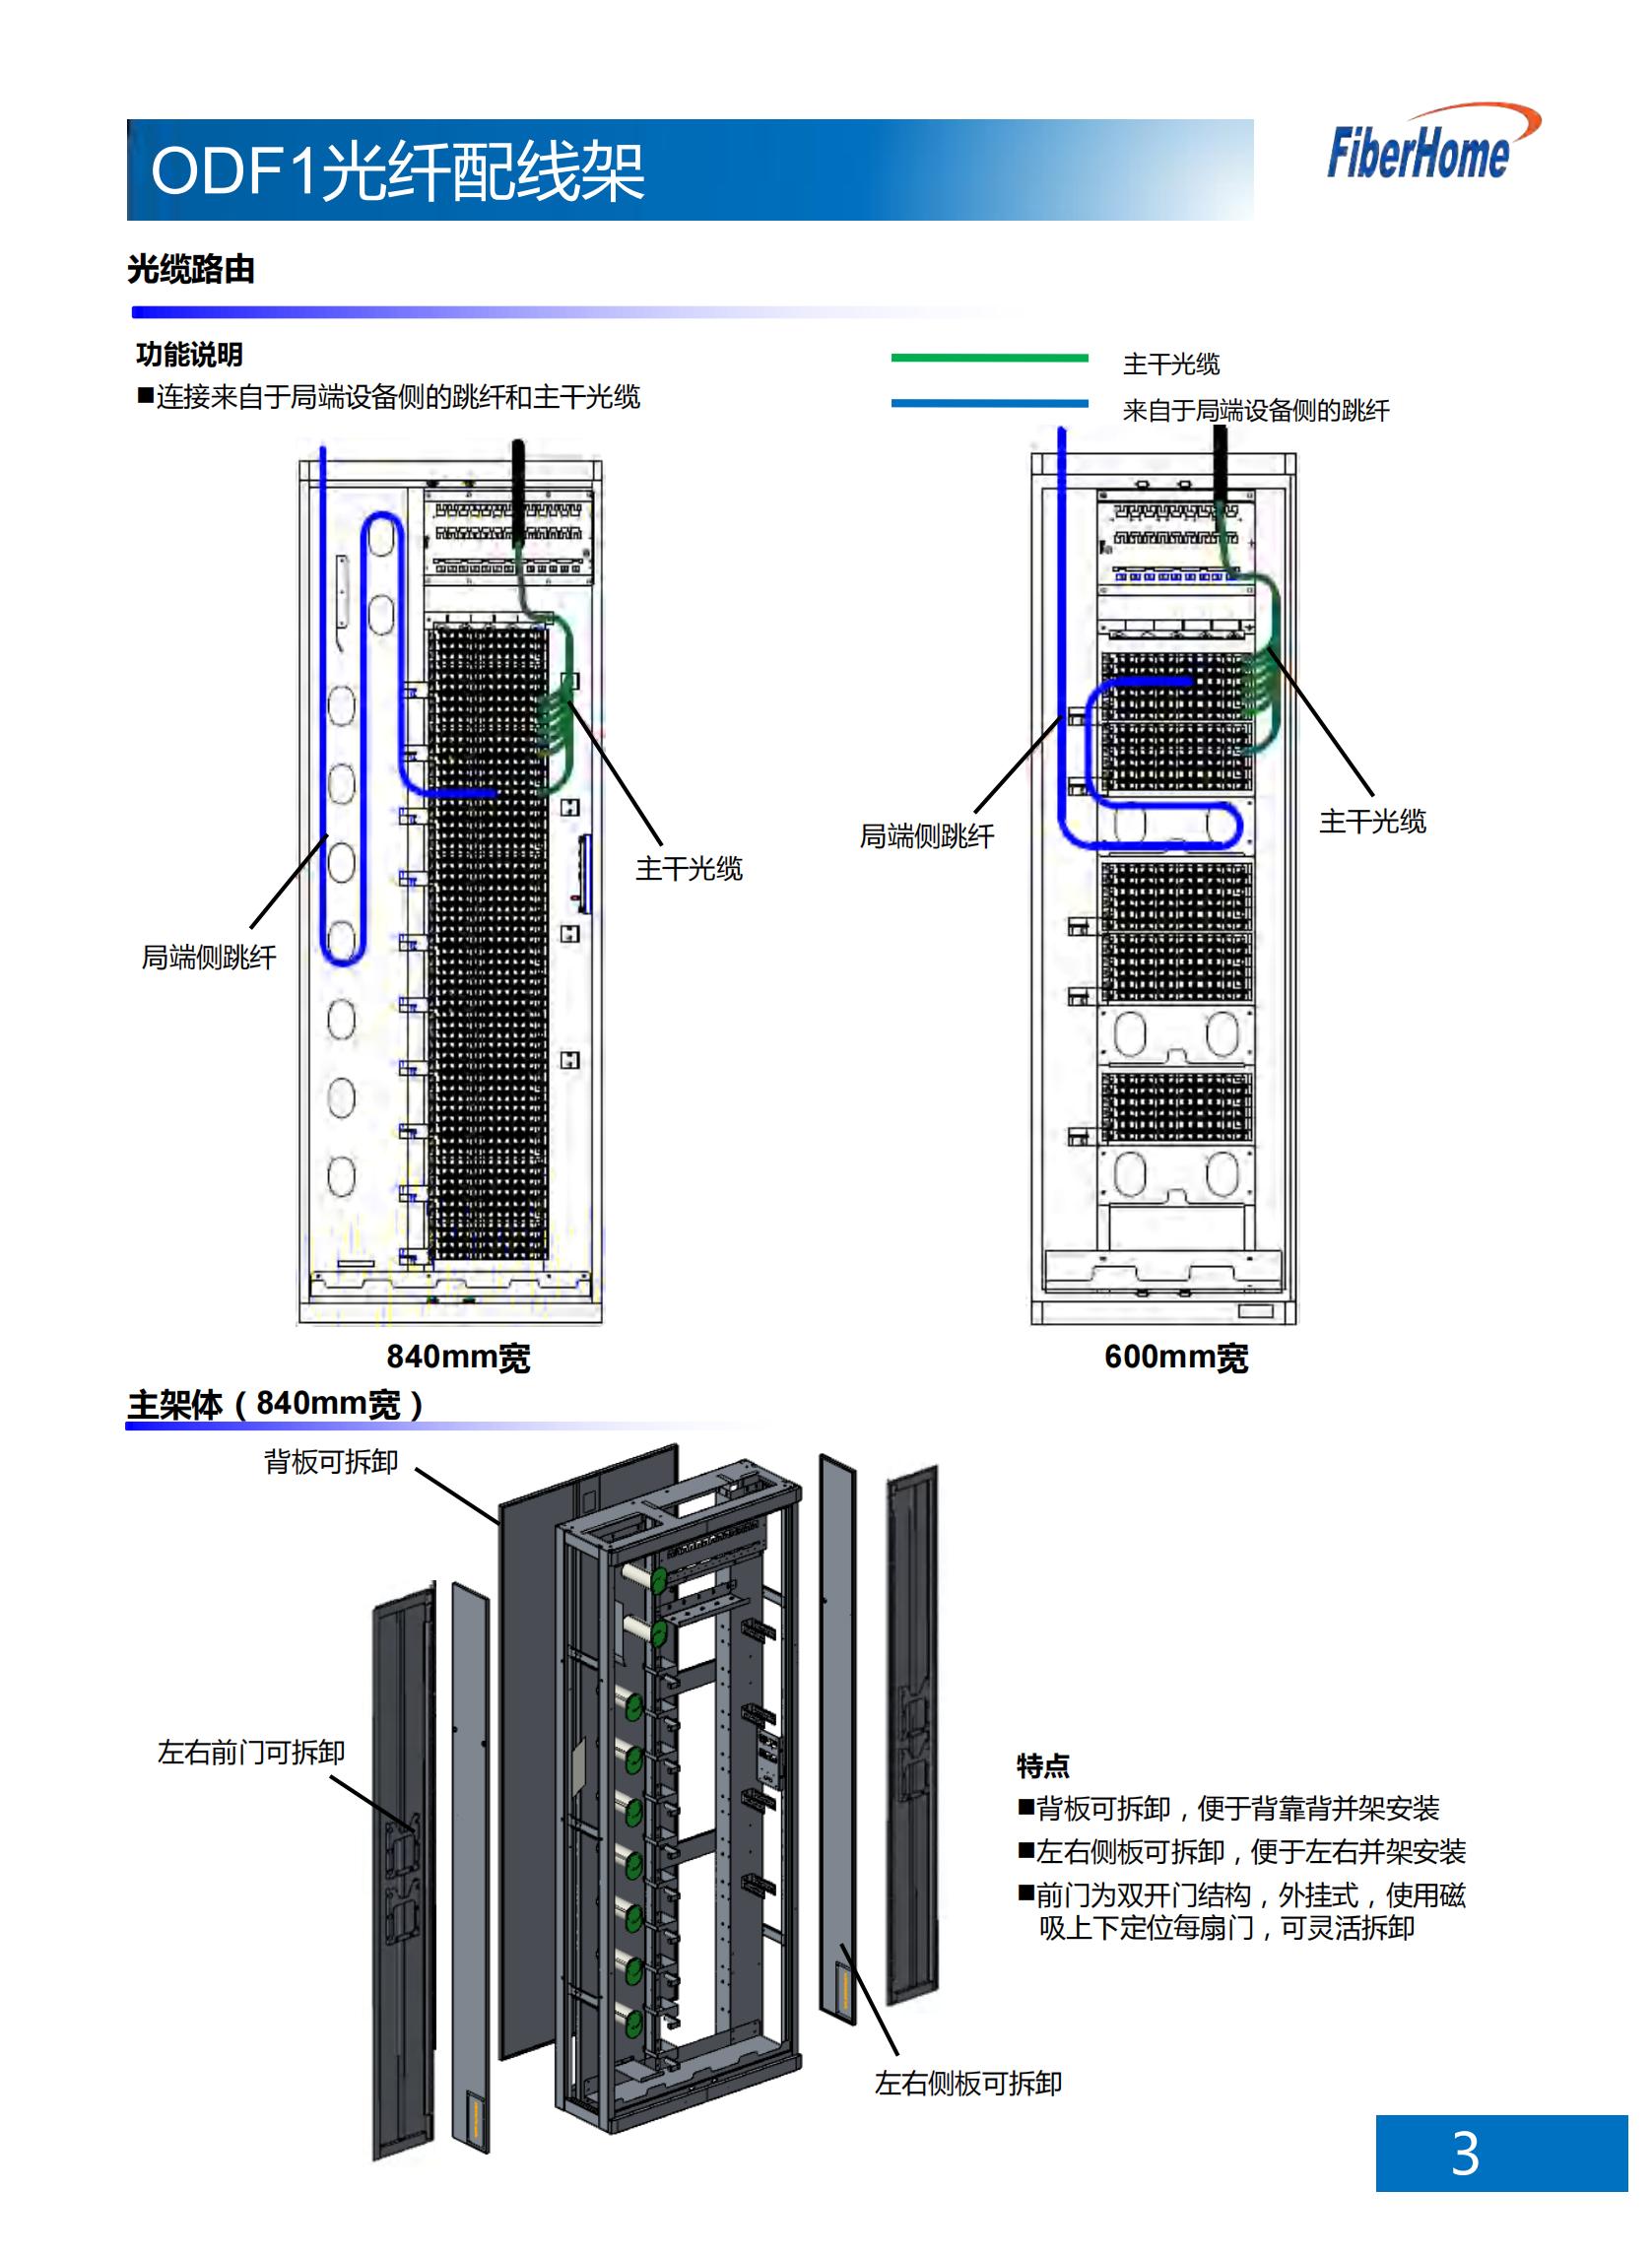 ODF101-504-A5-FC ODF optical fiber distribution frame (504-core floor-standing all include 12-core FC fusion integration unit)